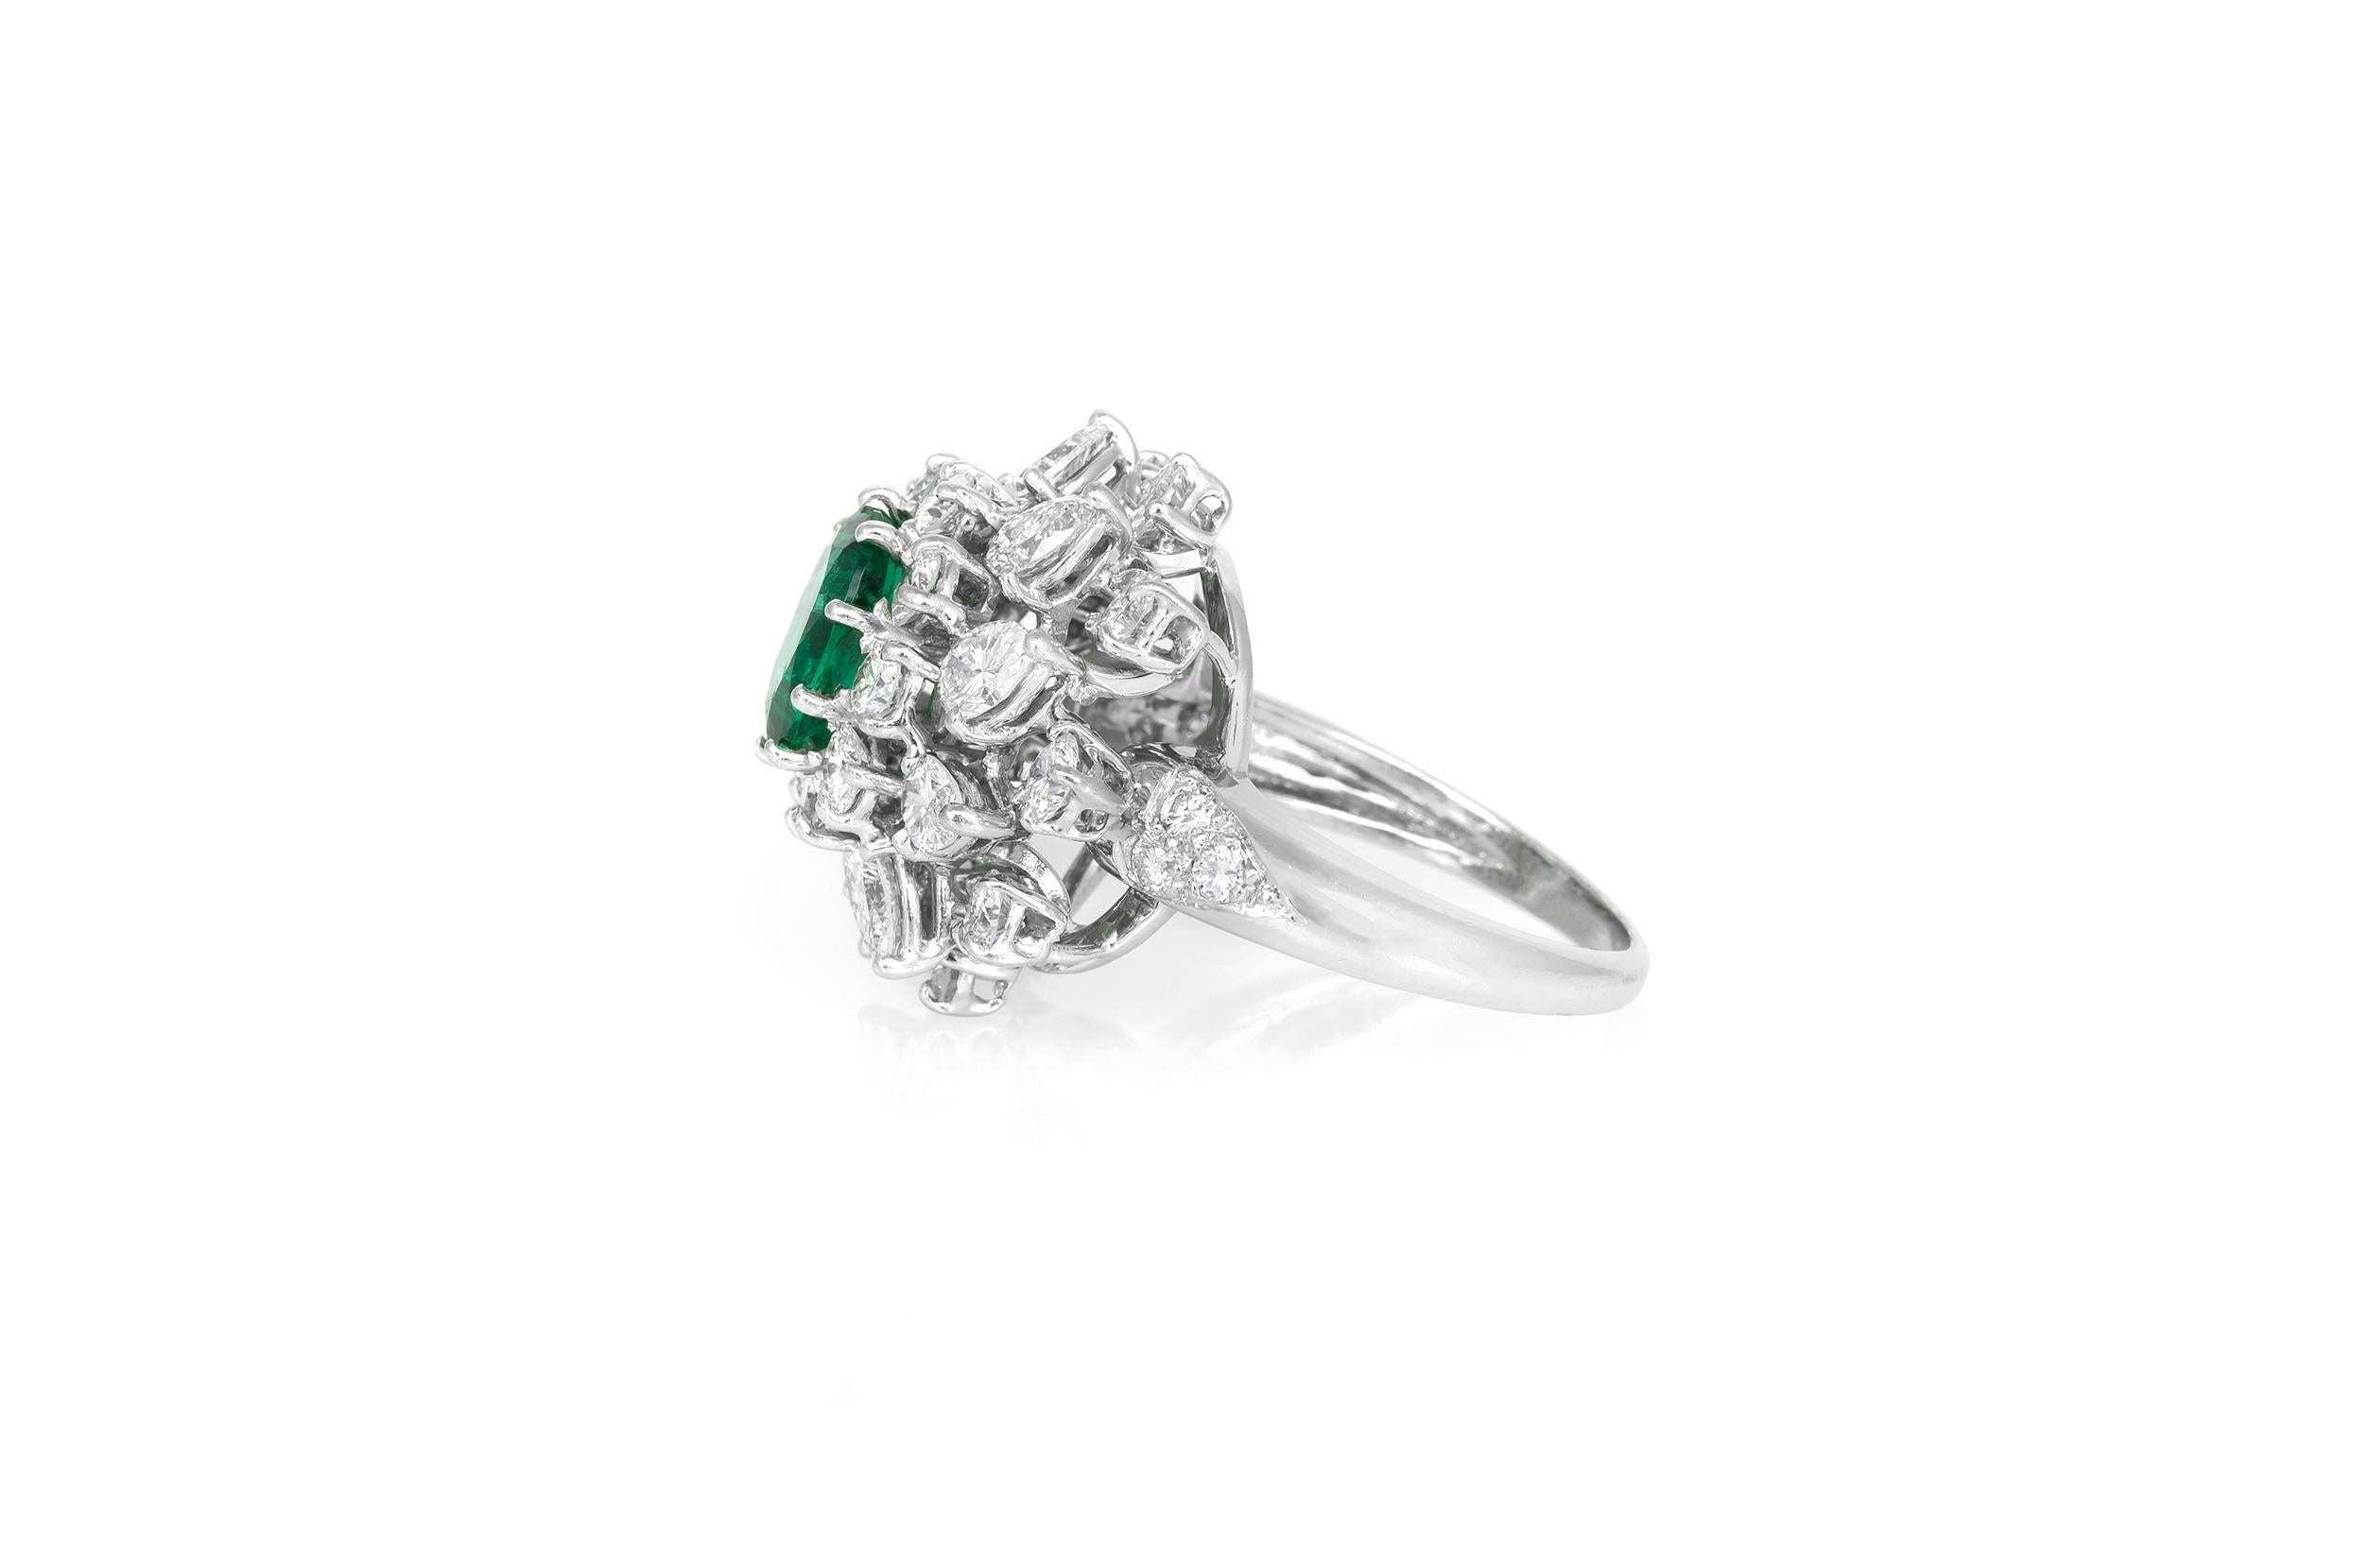 Oval Cut Van Cleef & Arpels Emerald Diamond Cluster Ring